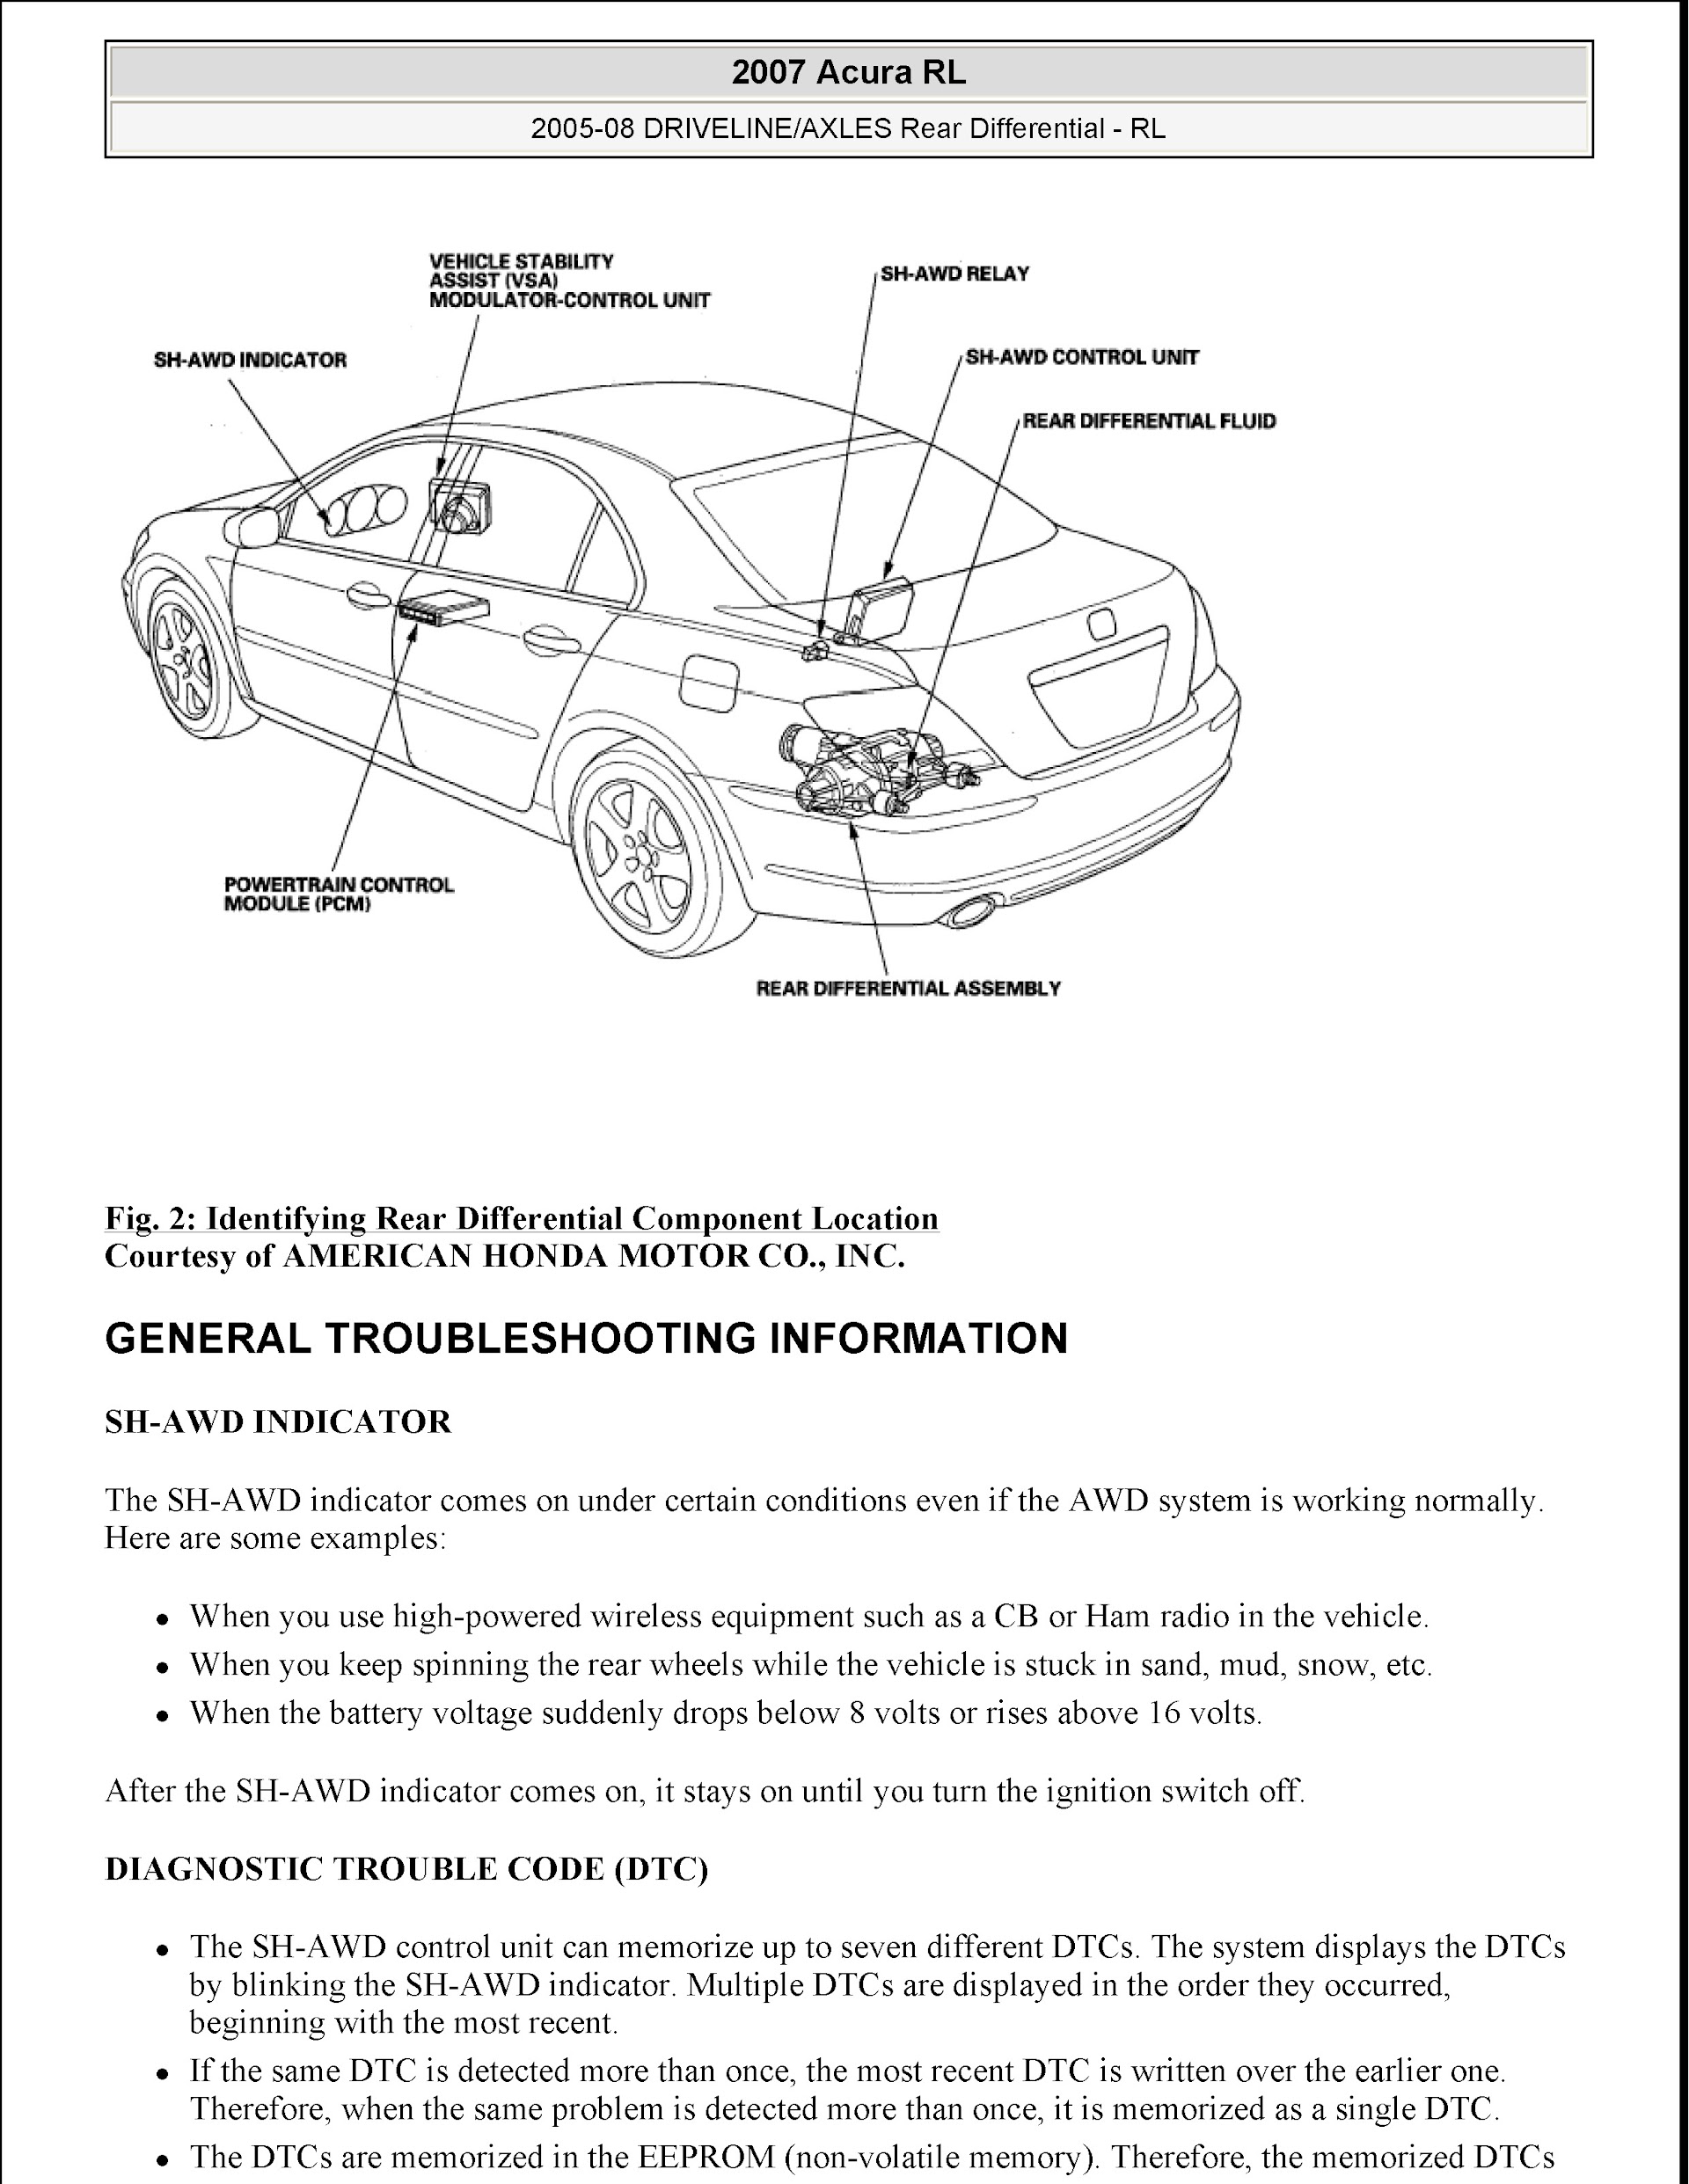 2008 Acura RL Repair Manual, Driveline, Axle Rear Differential